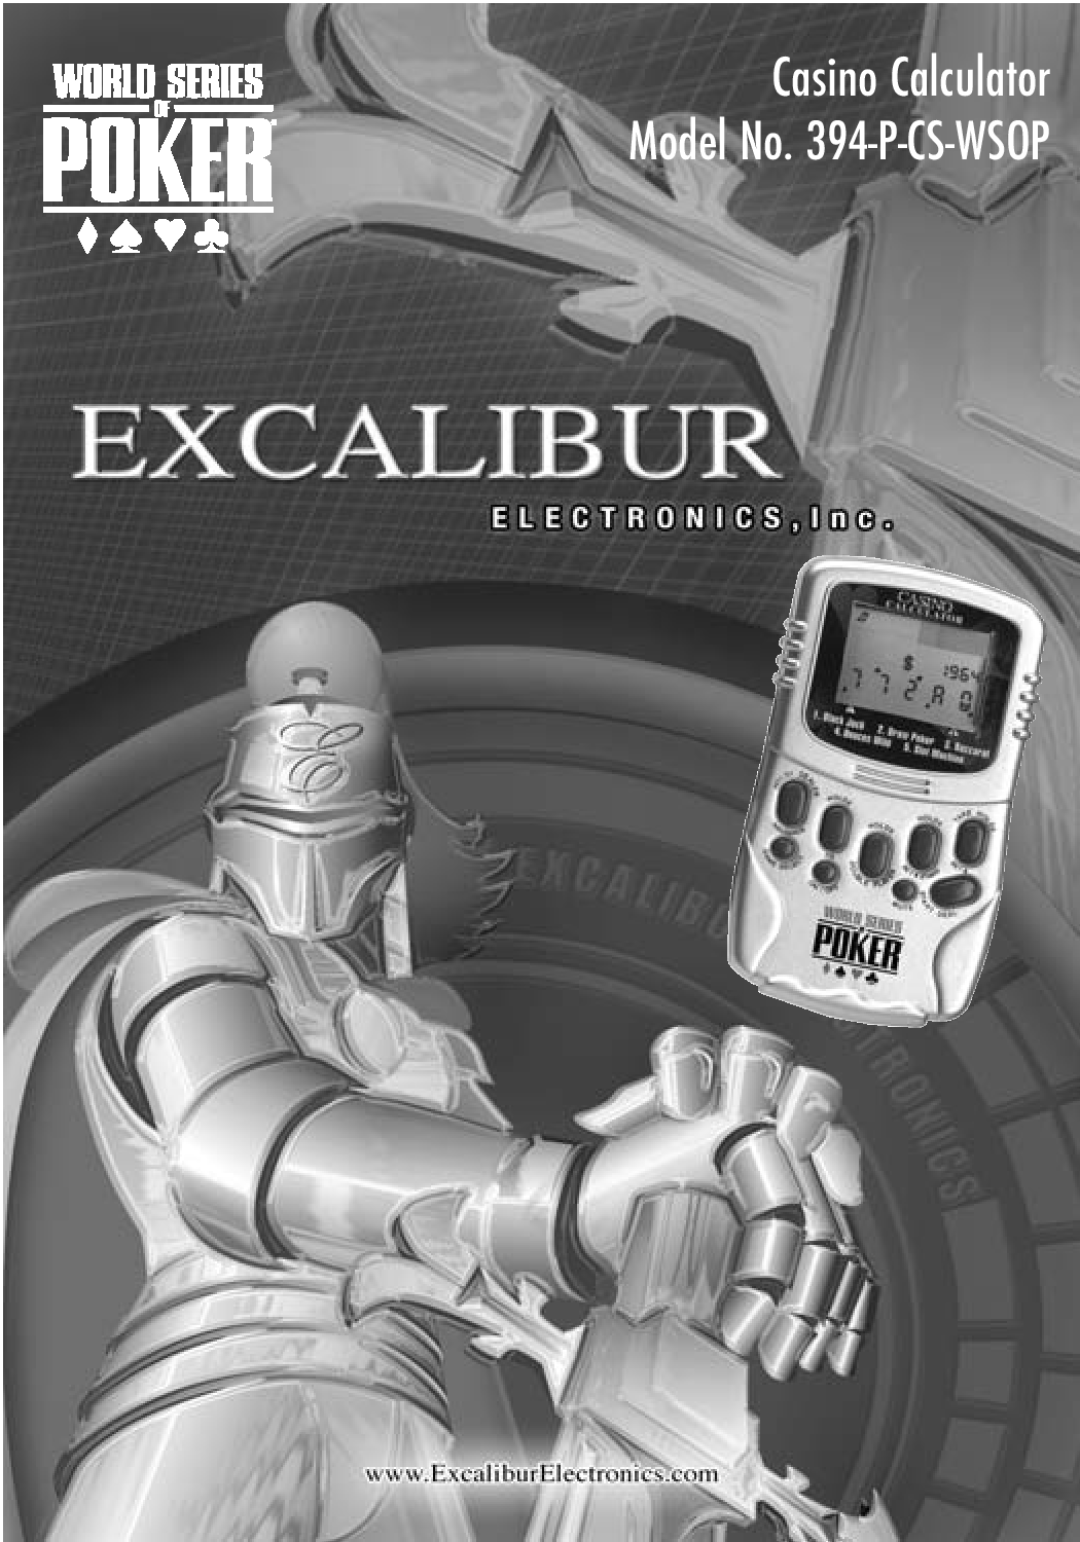 Excalibur electronic manual Casino Calculator, Model No. 394-P-CS-WSOP 